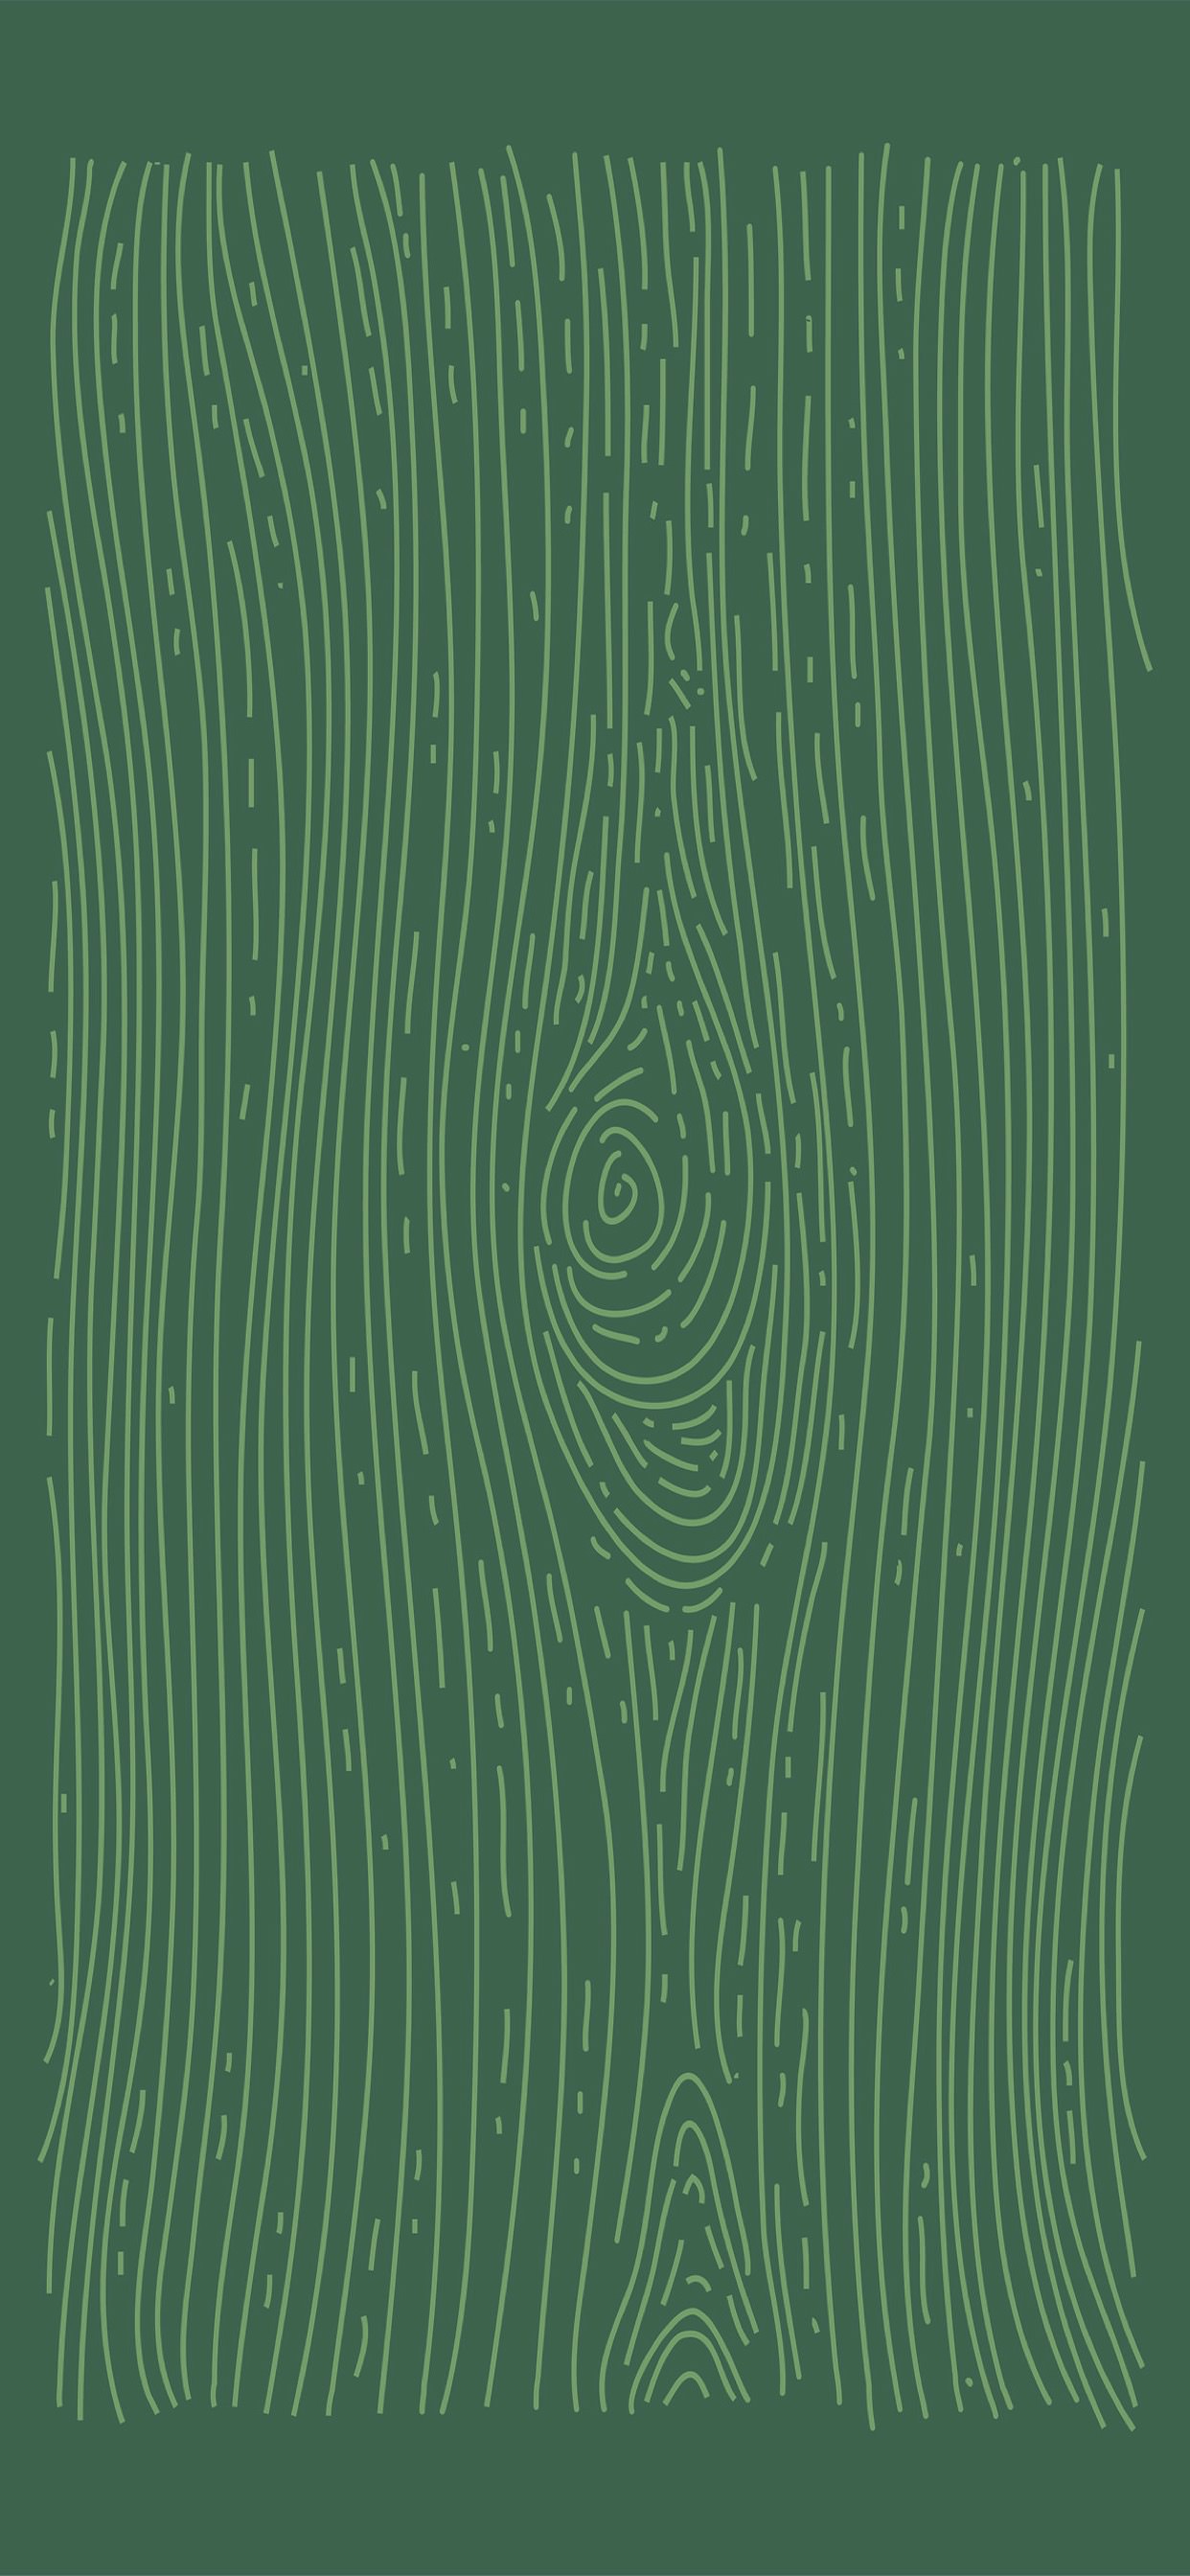 Illustrations Grain Green Wallpaper Sc Iphone Xs Max